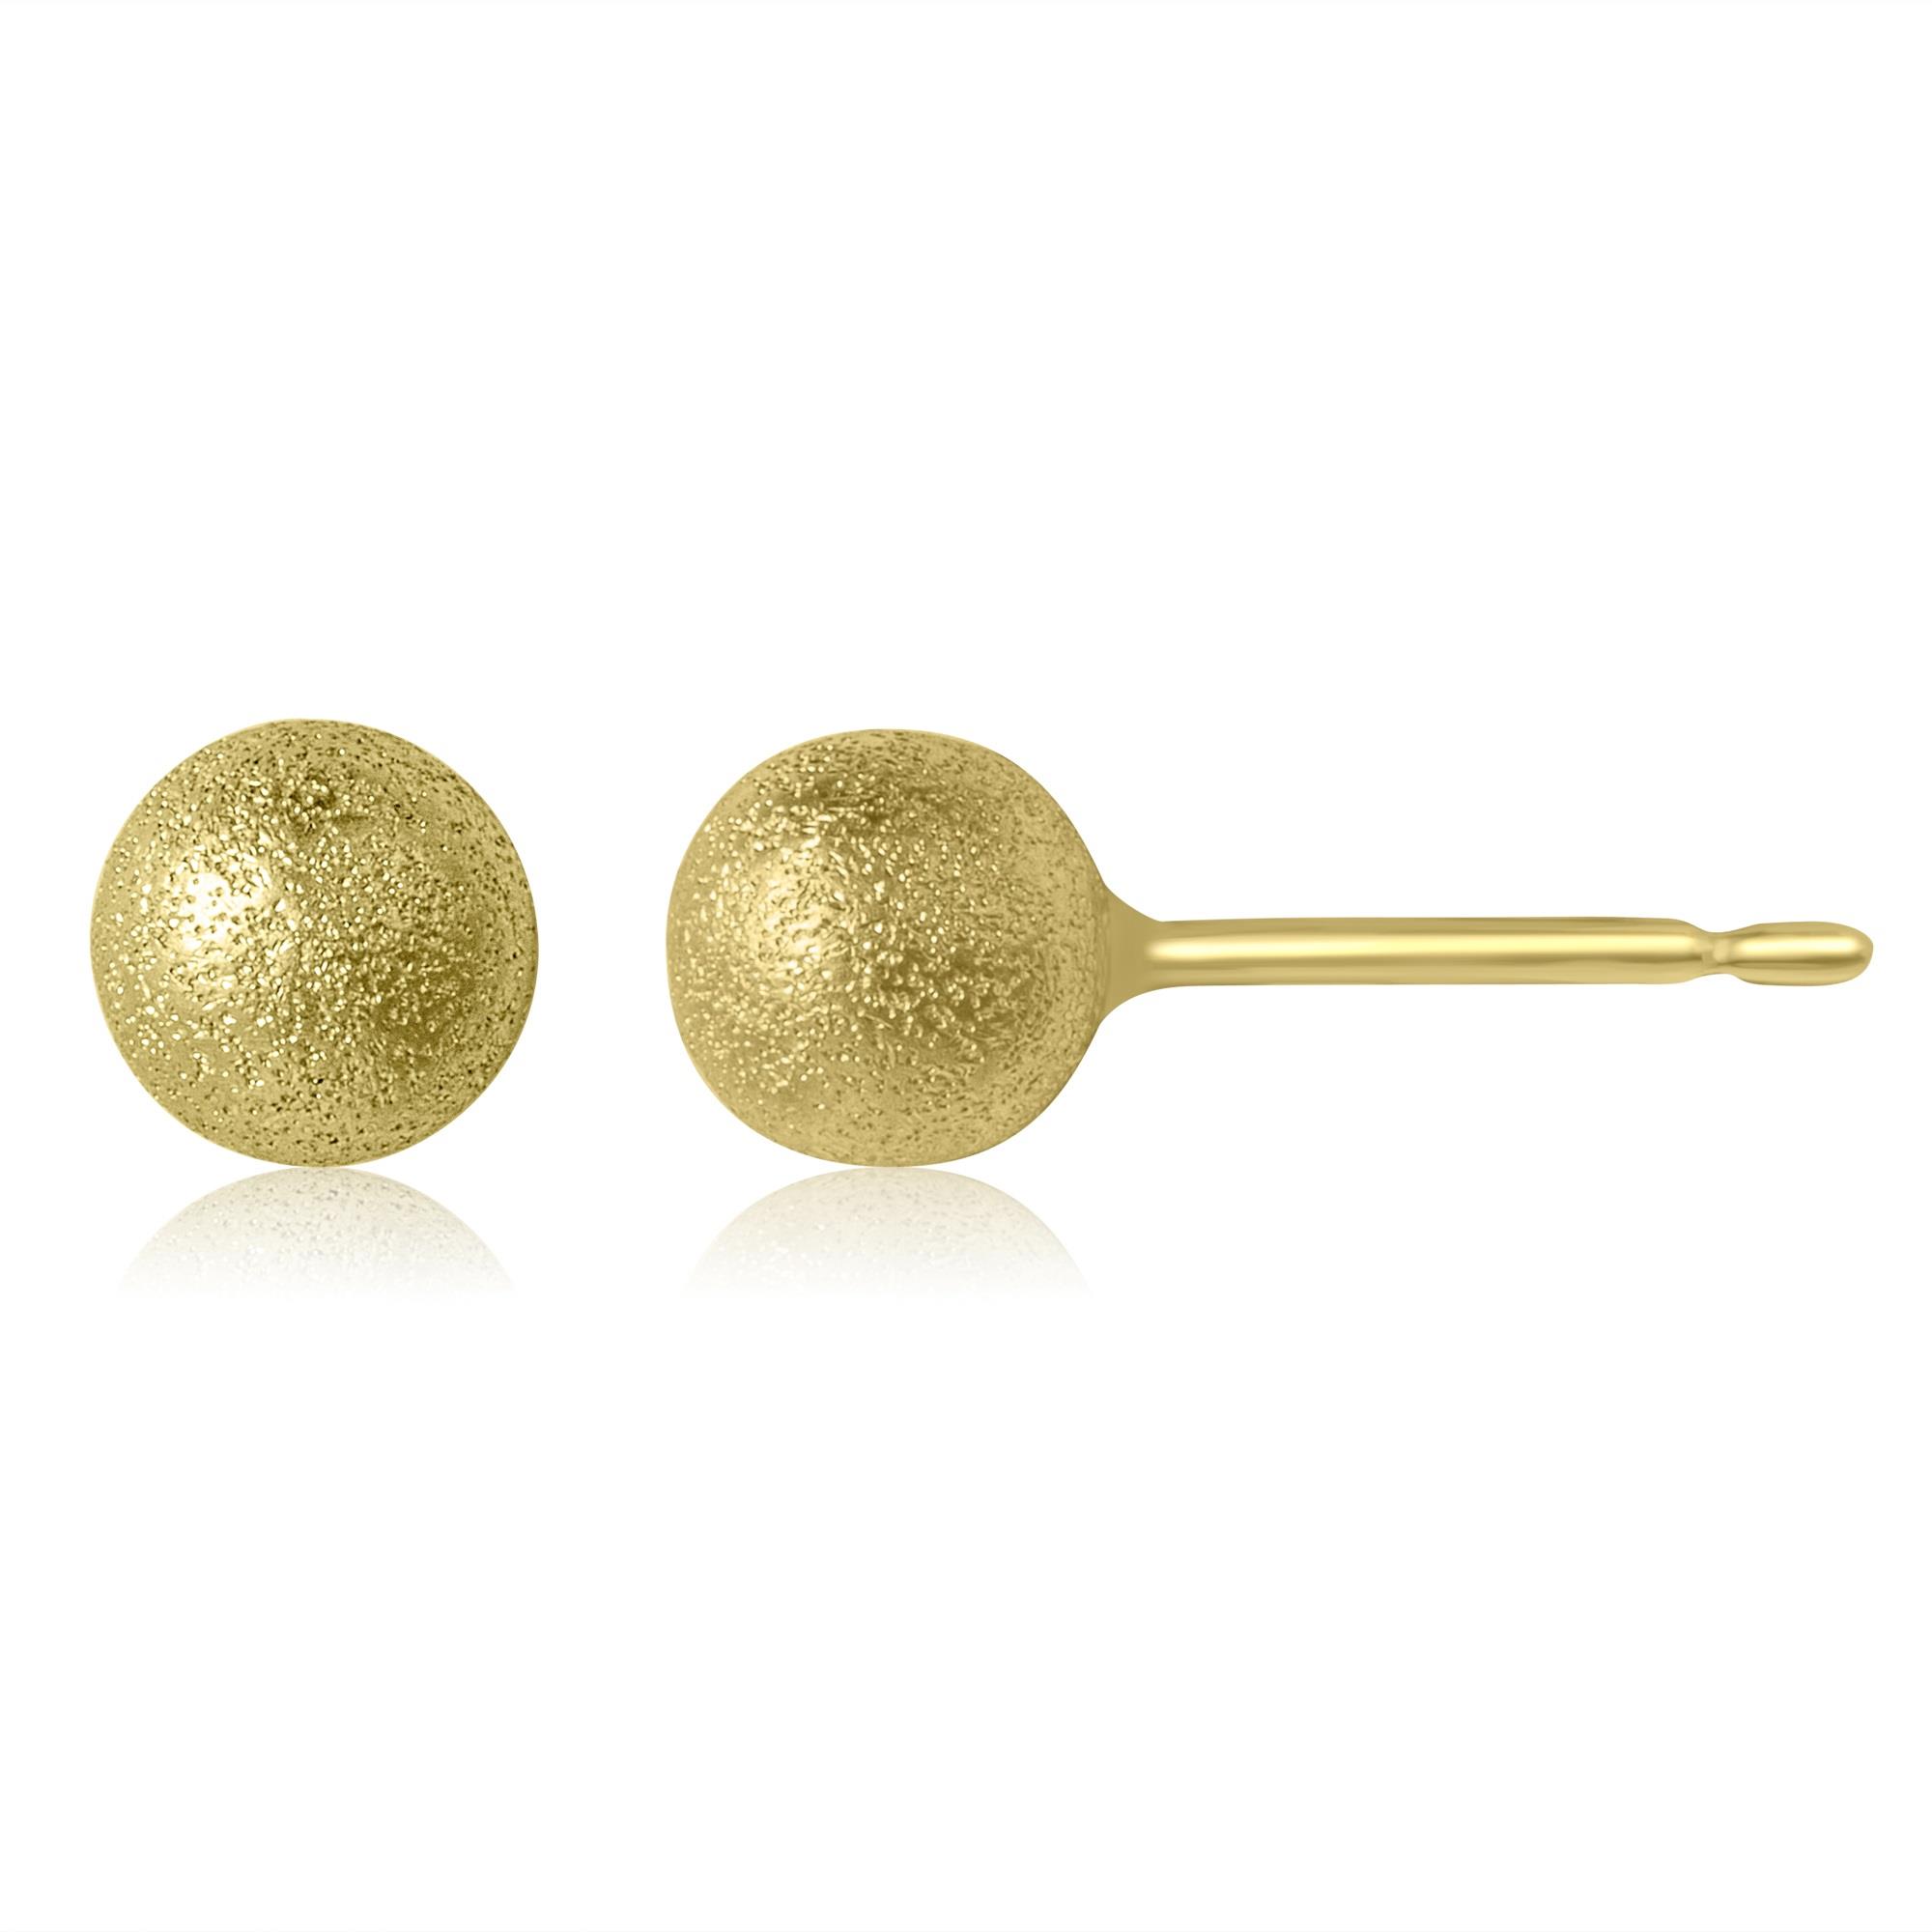 Simple Light Daily Wear Gold Earrings Design For Girls 2020 - YouTube